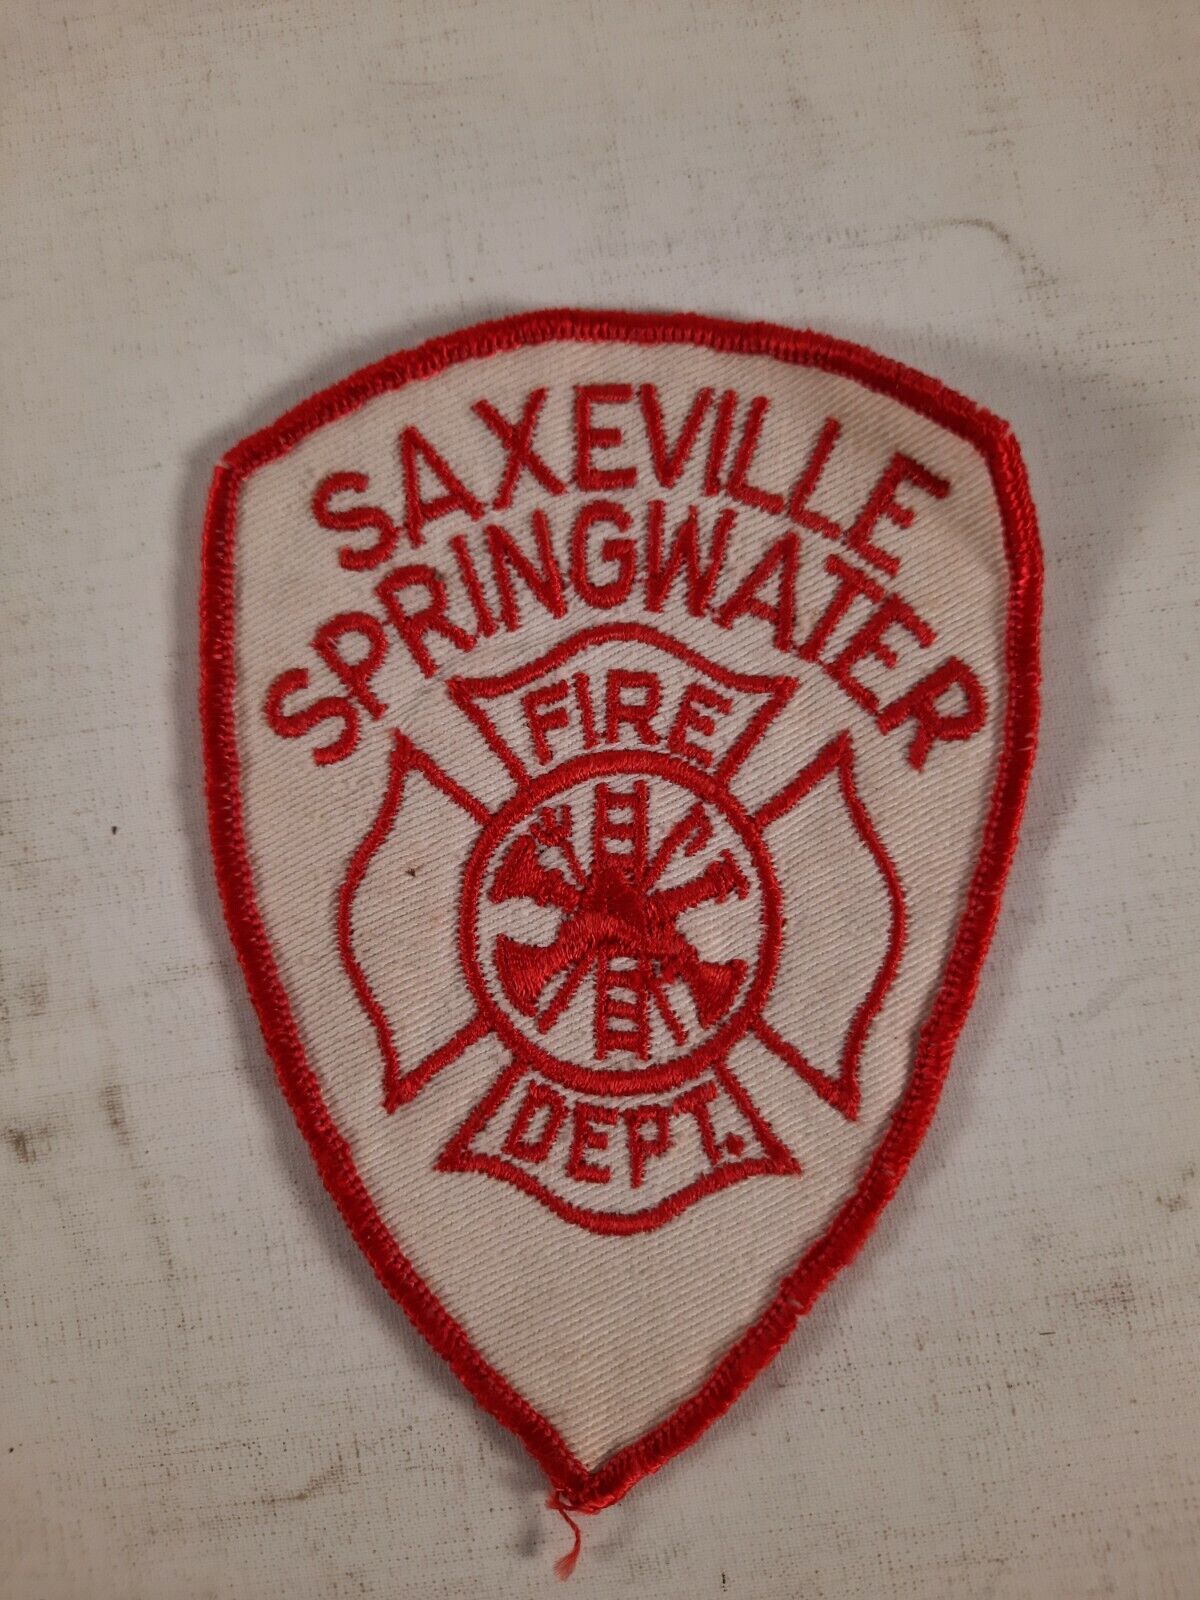 Saxeville Springwater  Fire dept patch fire department 